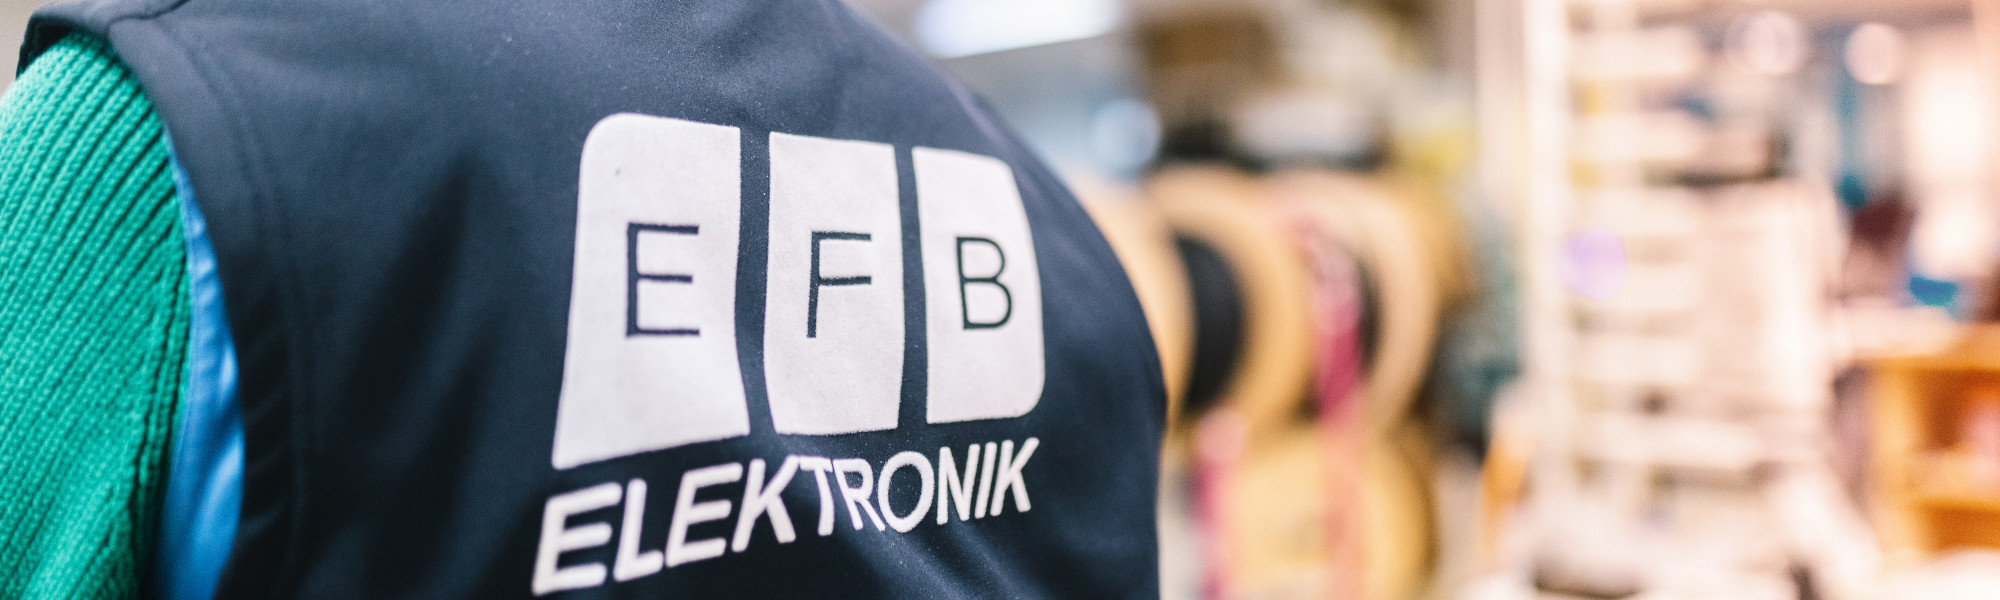 EFB-Elektronik Logo on work outfit, EFB-Elektronik